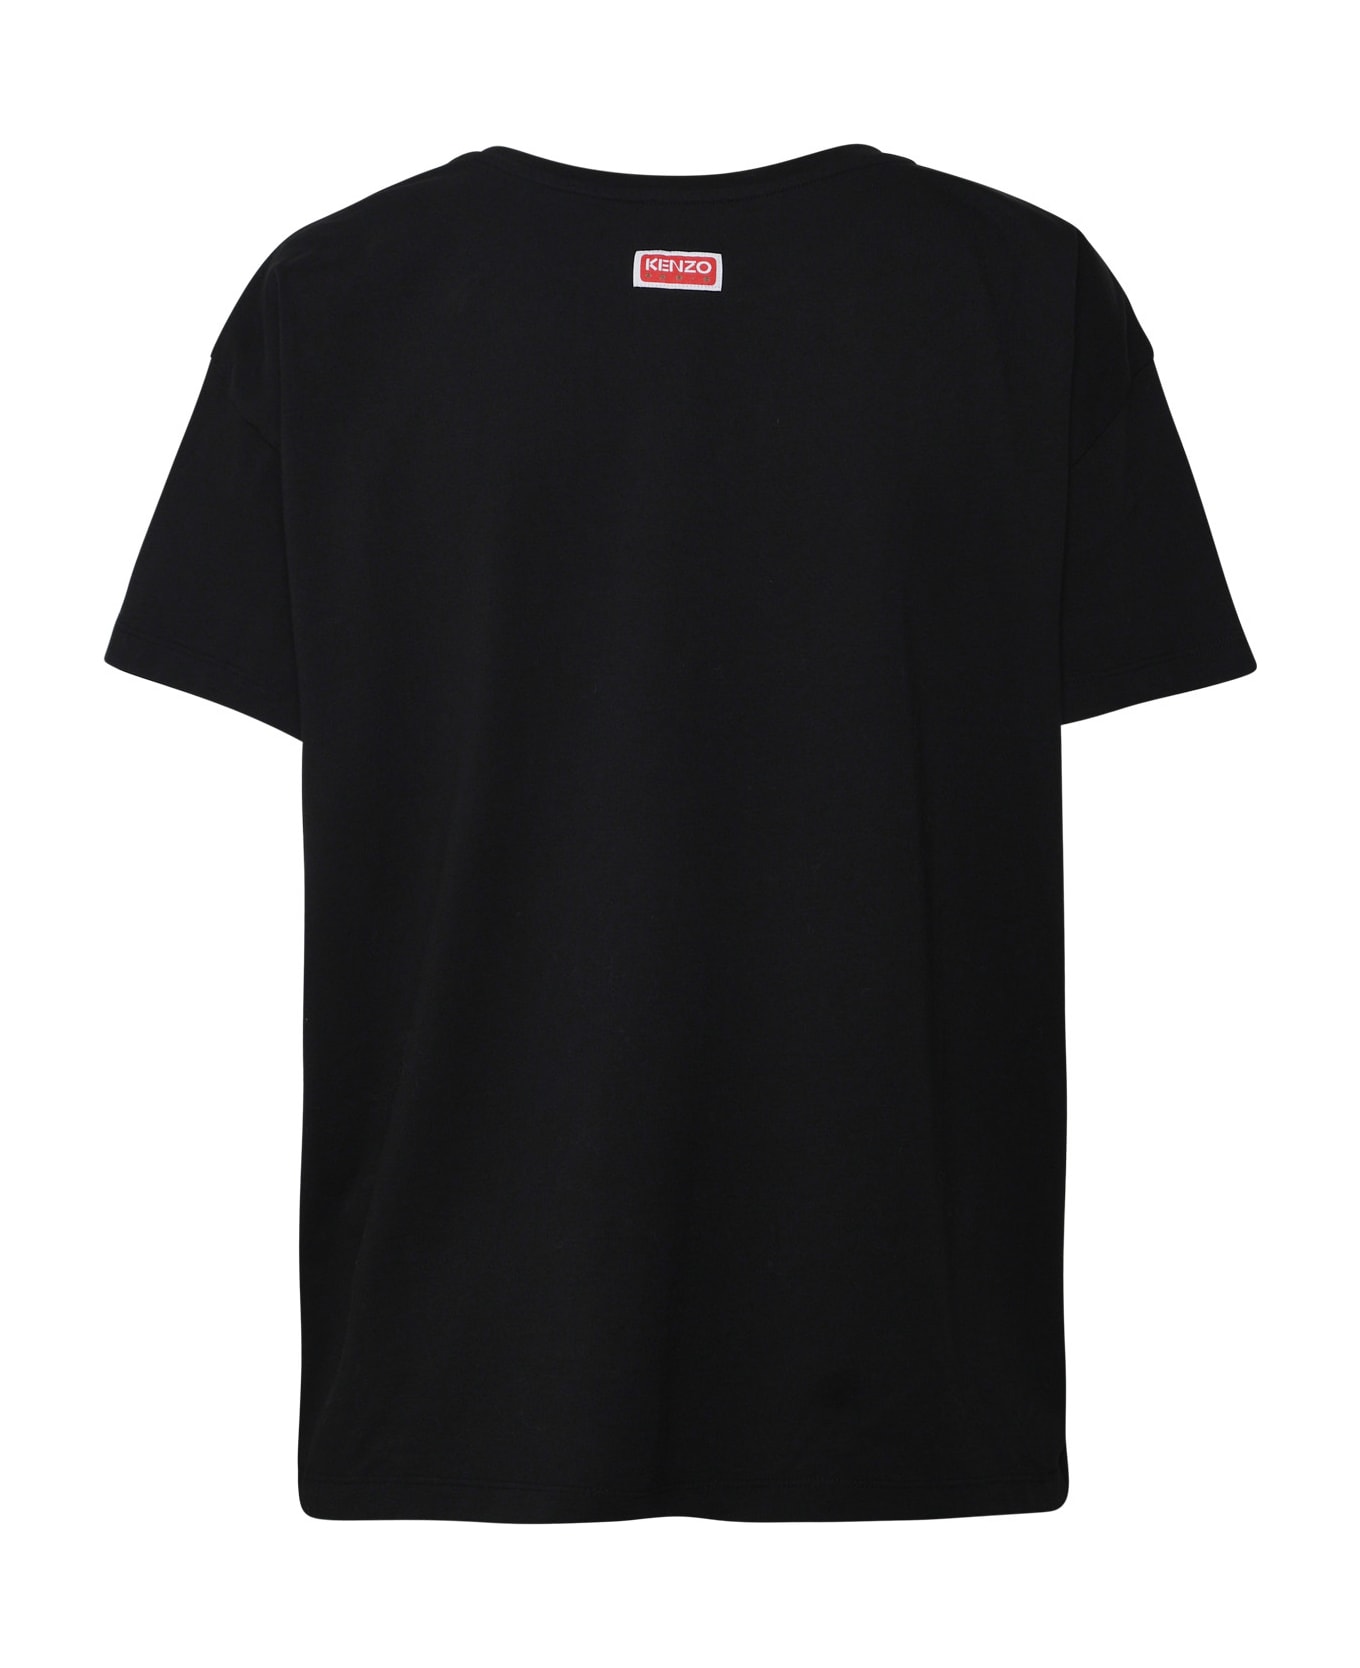 Kenzo Black Cotton T-shirt - Black